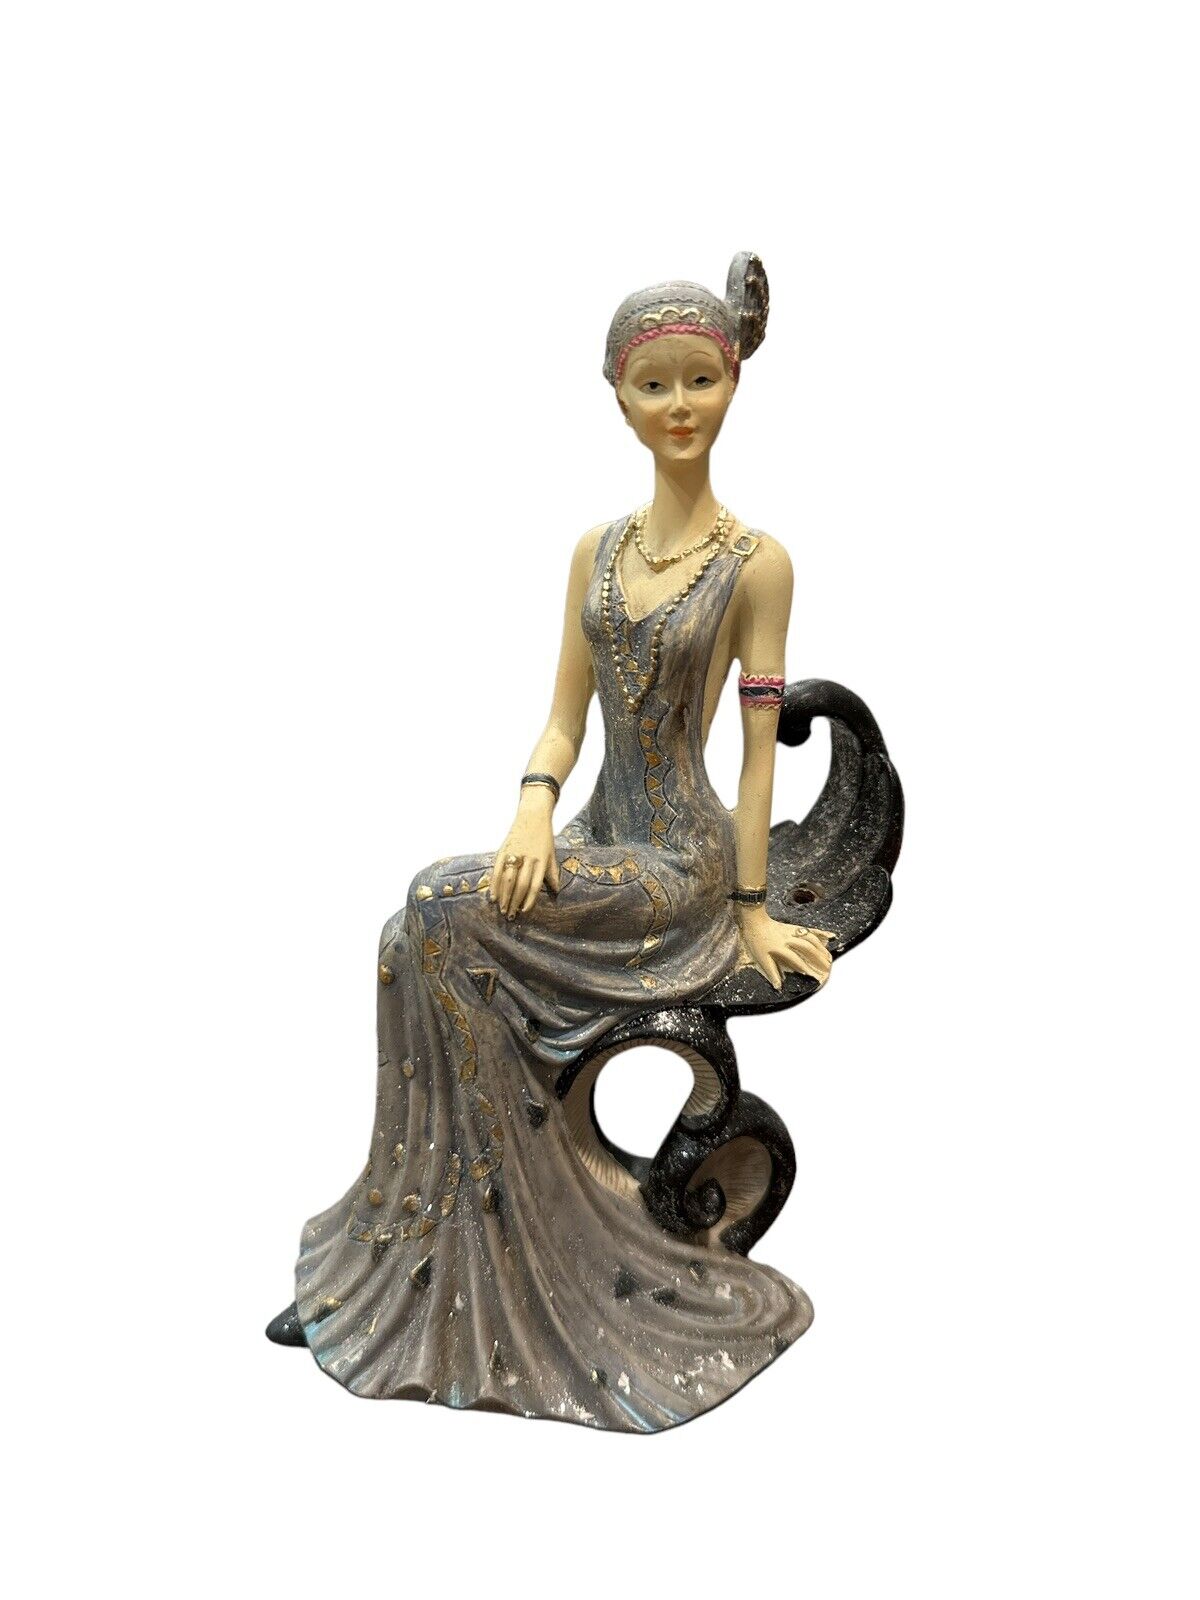 Beautiful Rare Seated Art Deco figurine by Shudehill - Flapper 7.5 Inches